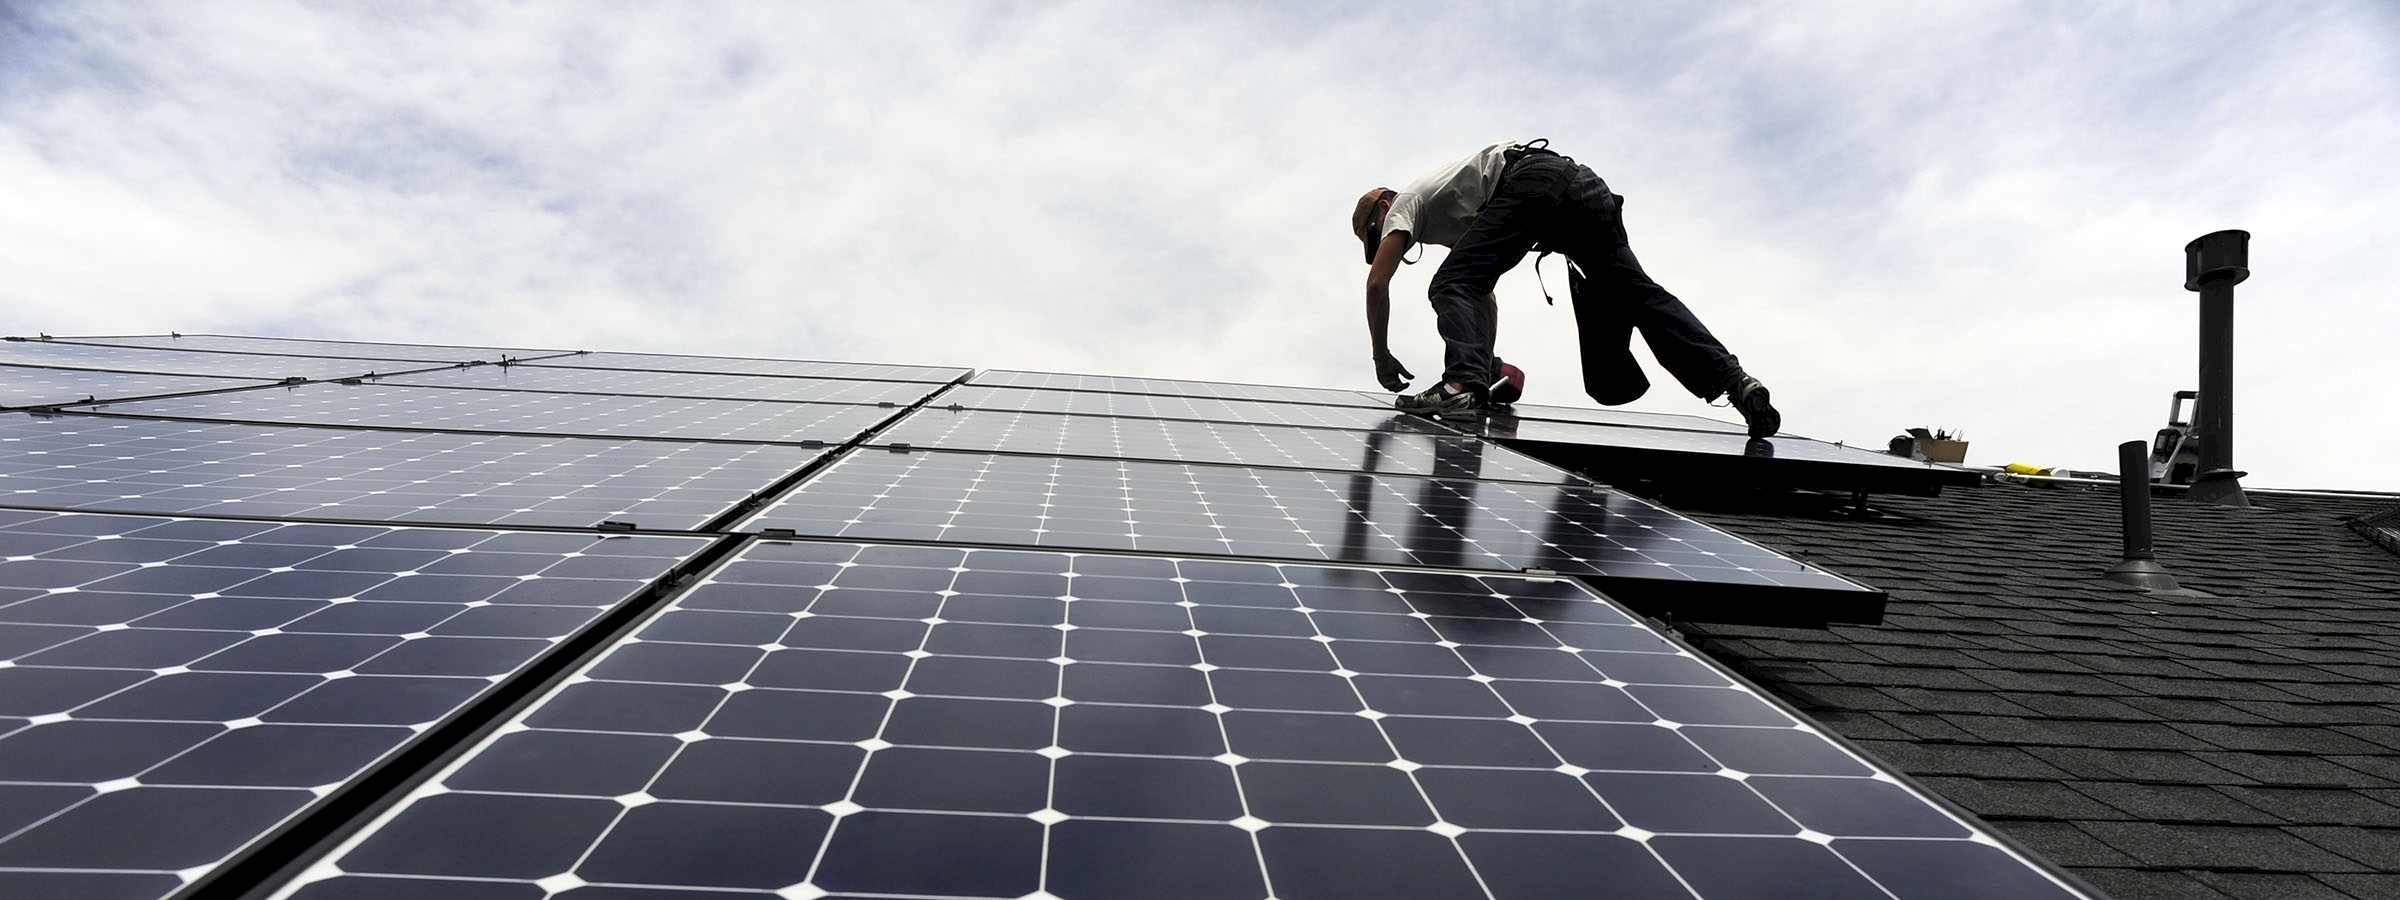 Region’s Solar Firms Take Dim View of Tariff